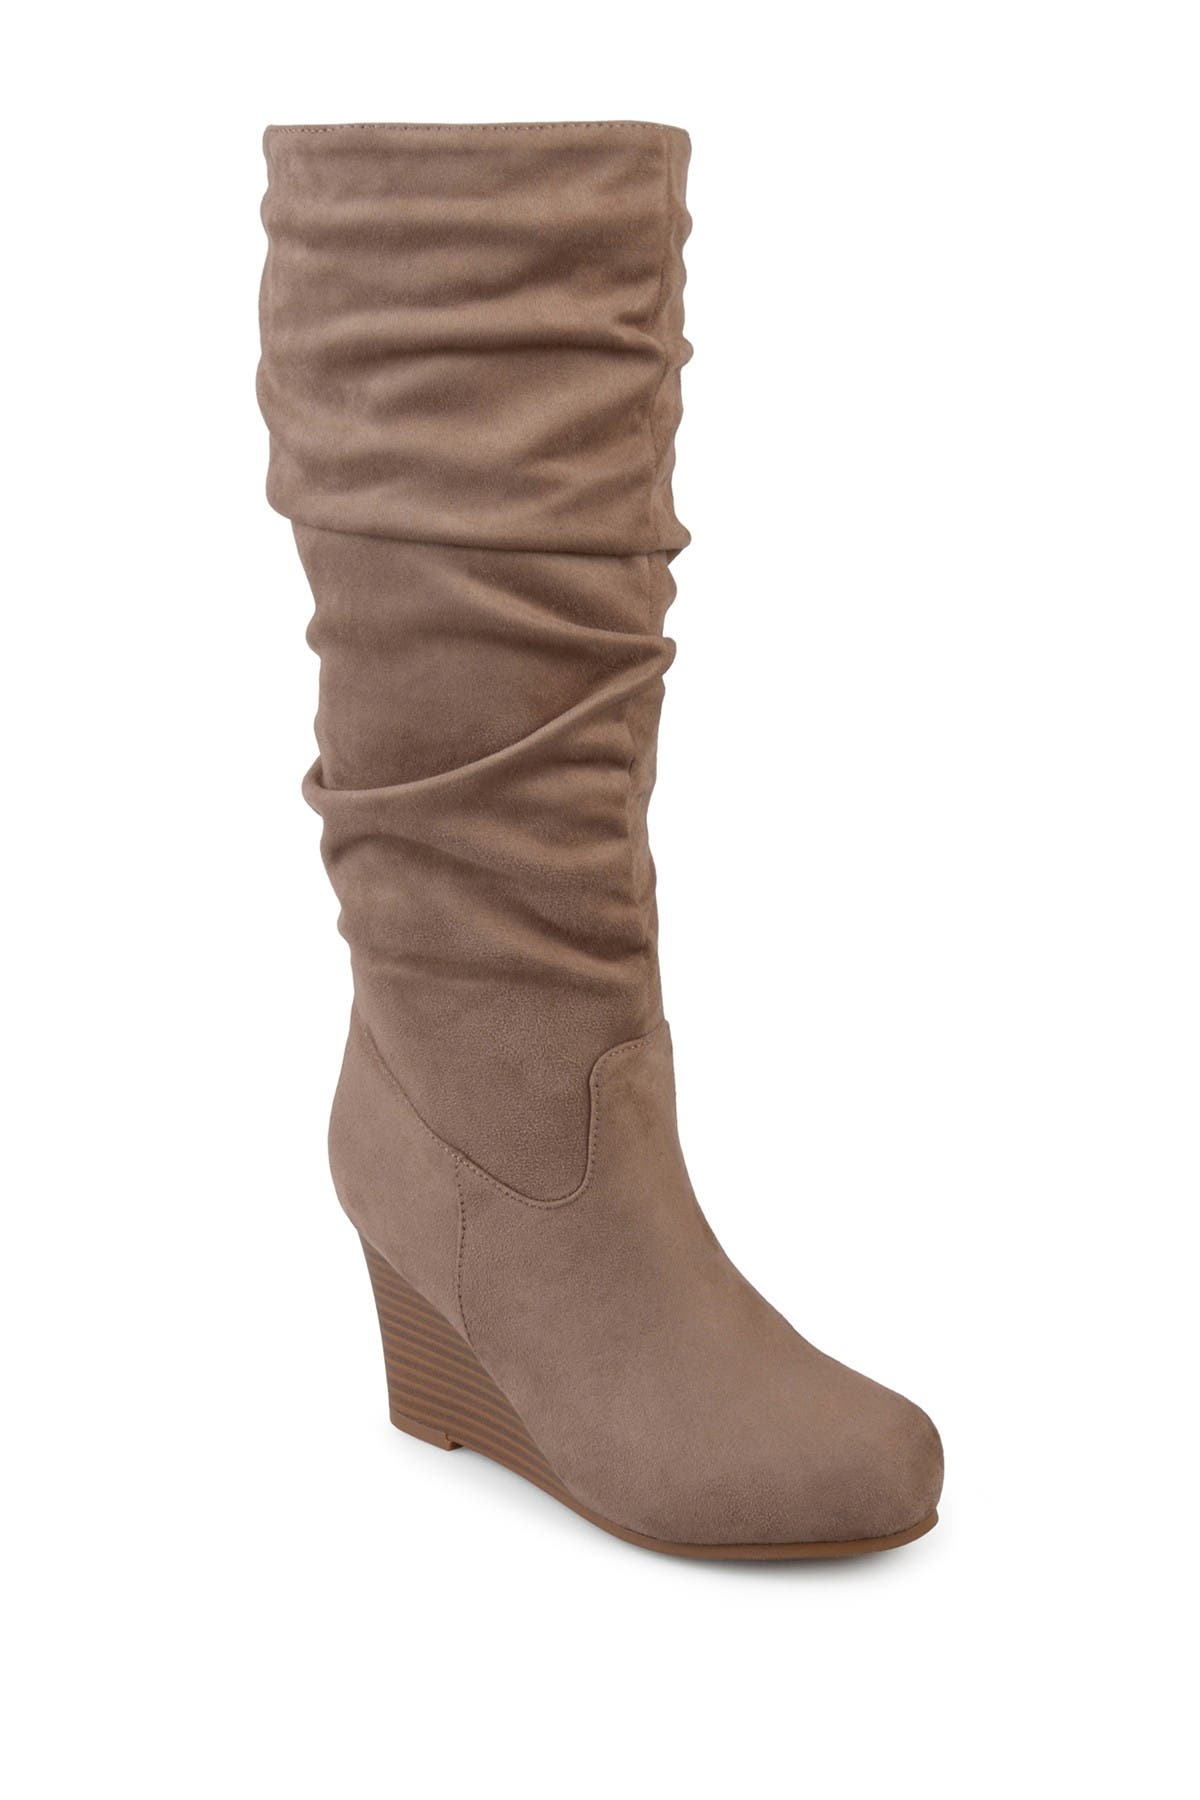 wide calf heeled boot